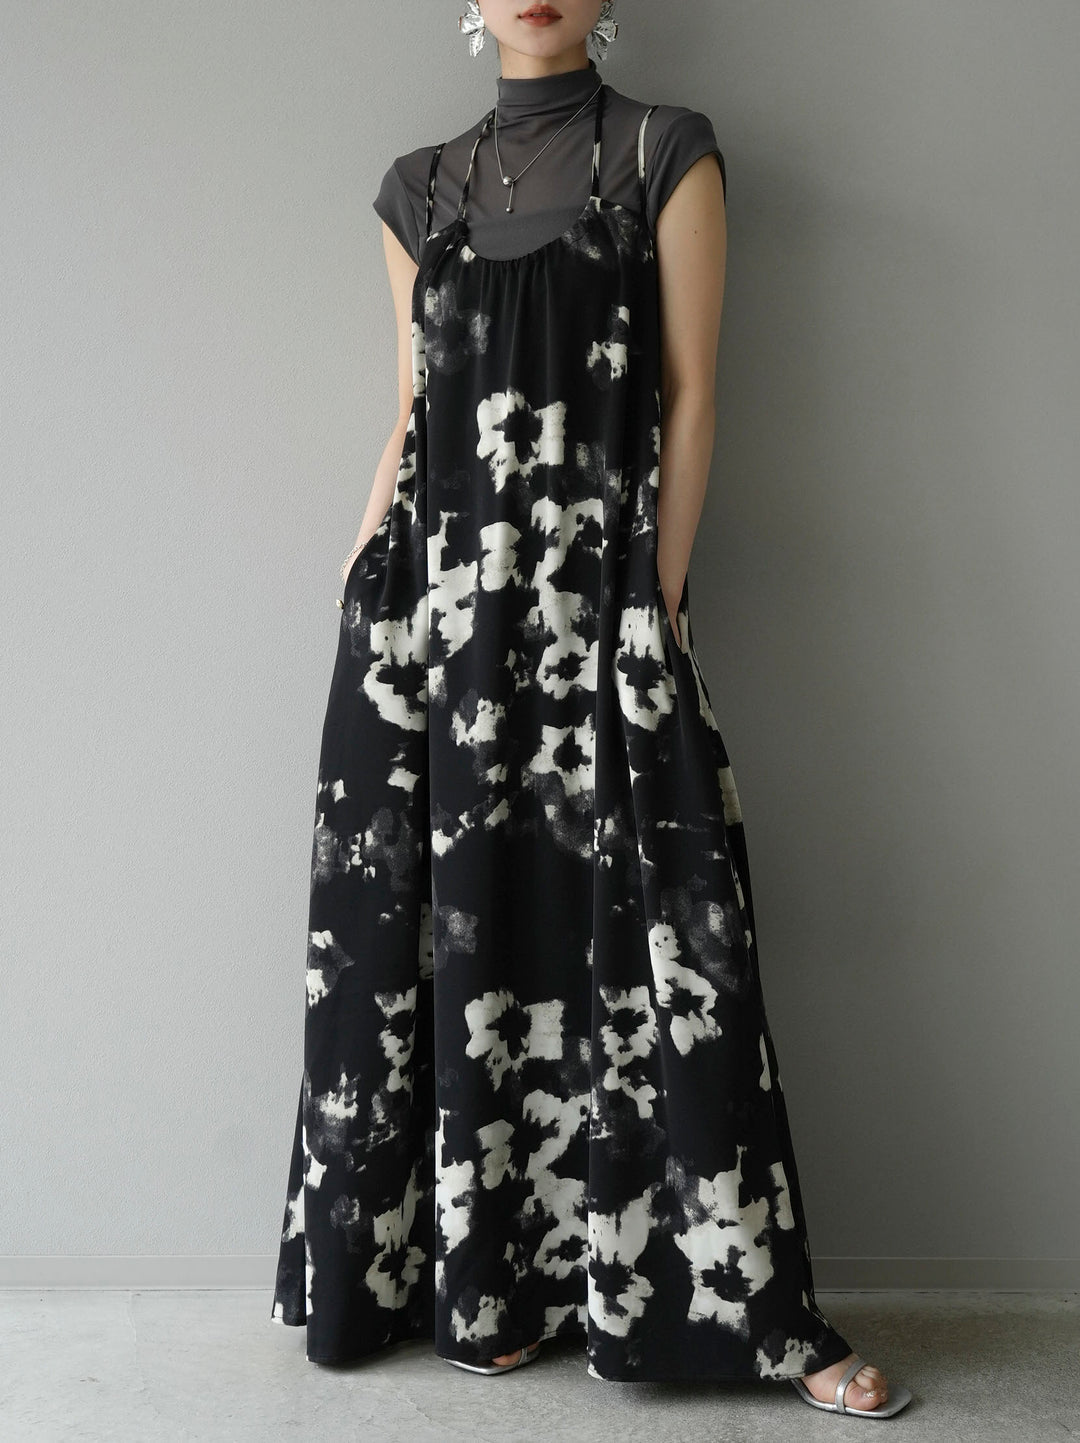 [SET] Back open flower print cami dress + selectable accessory set (2 sets)